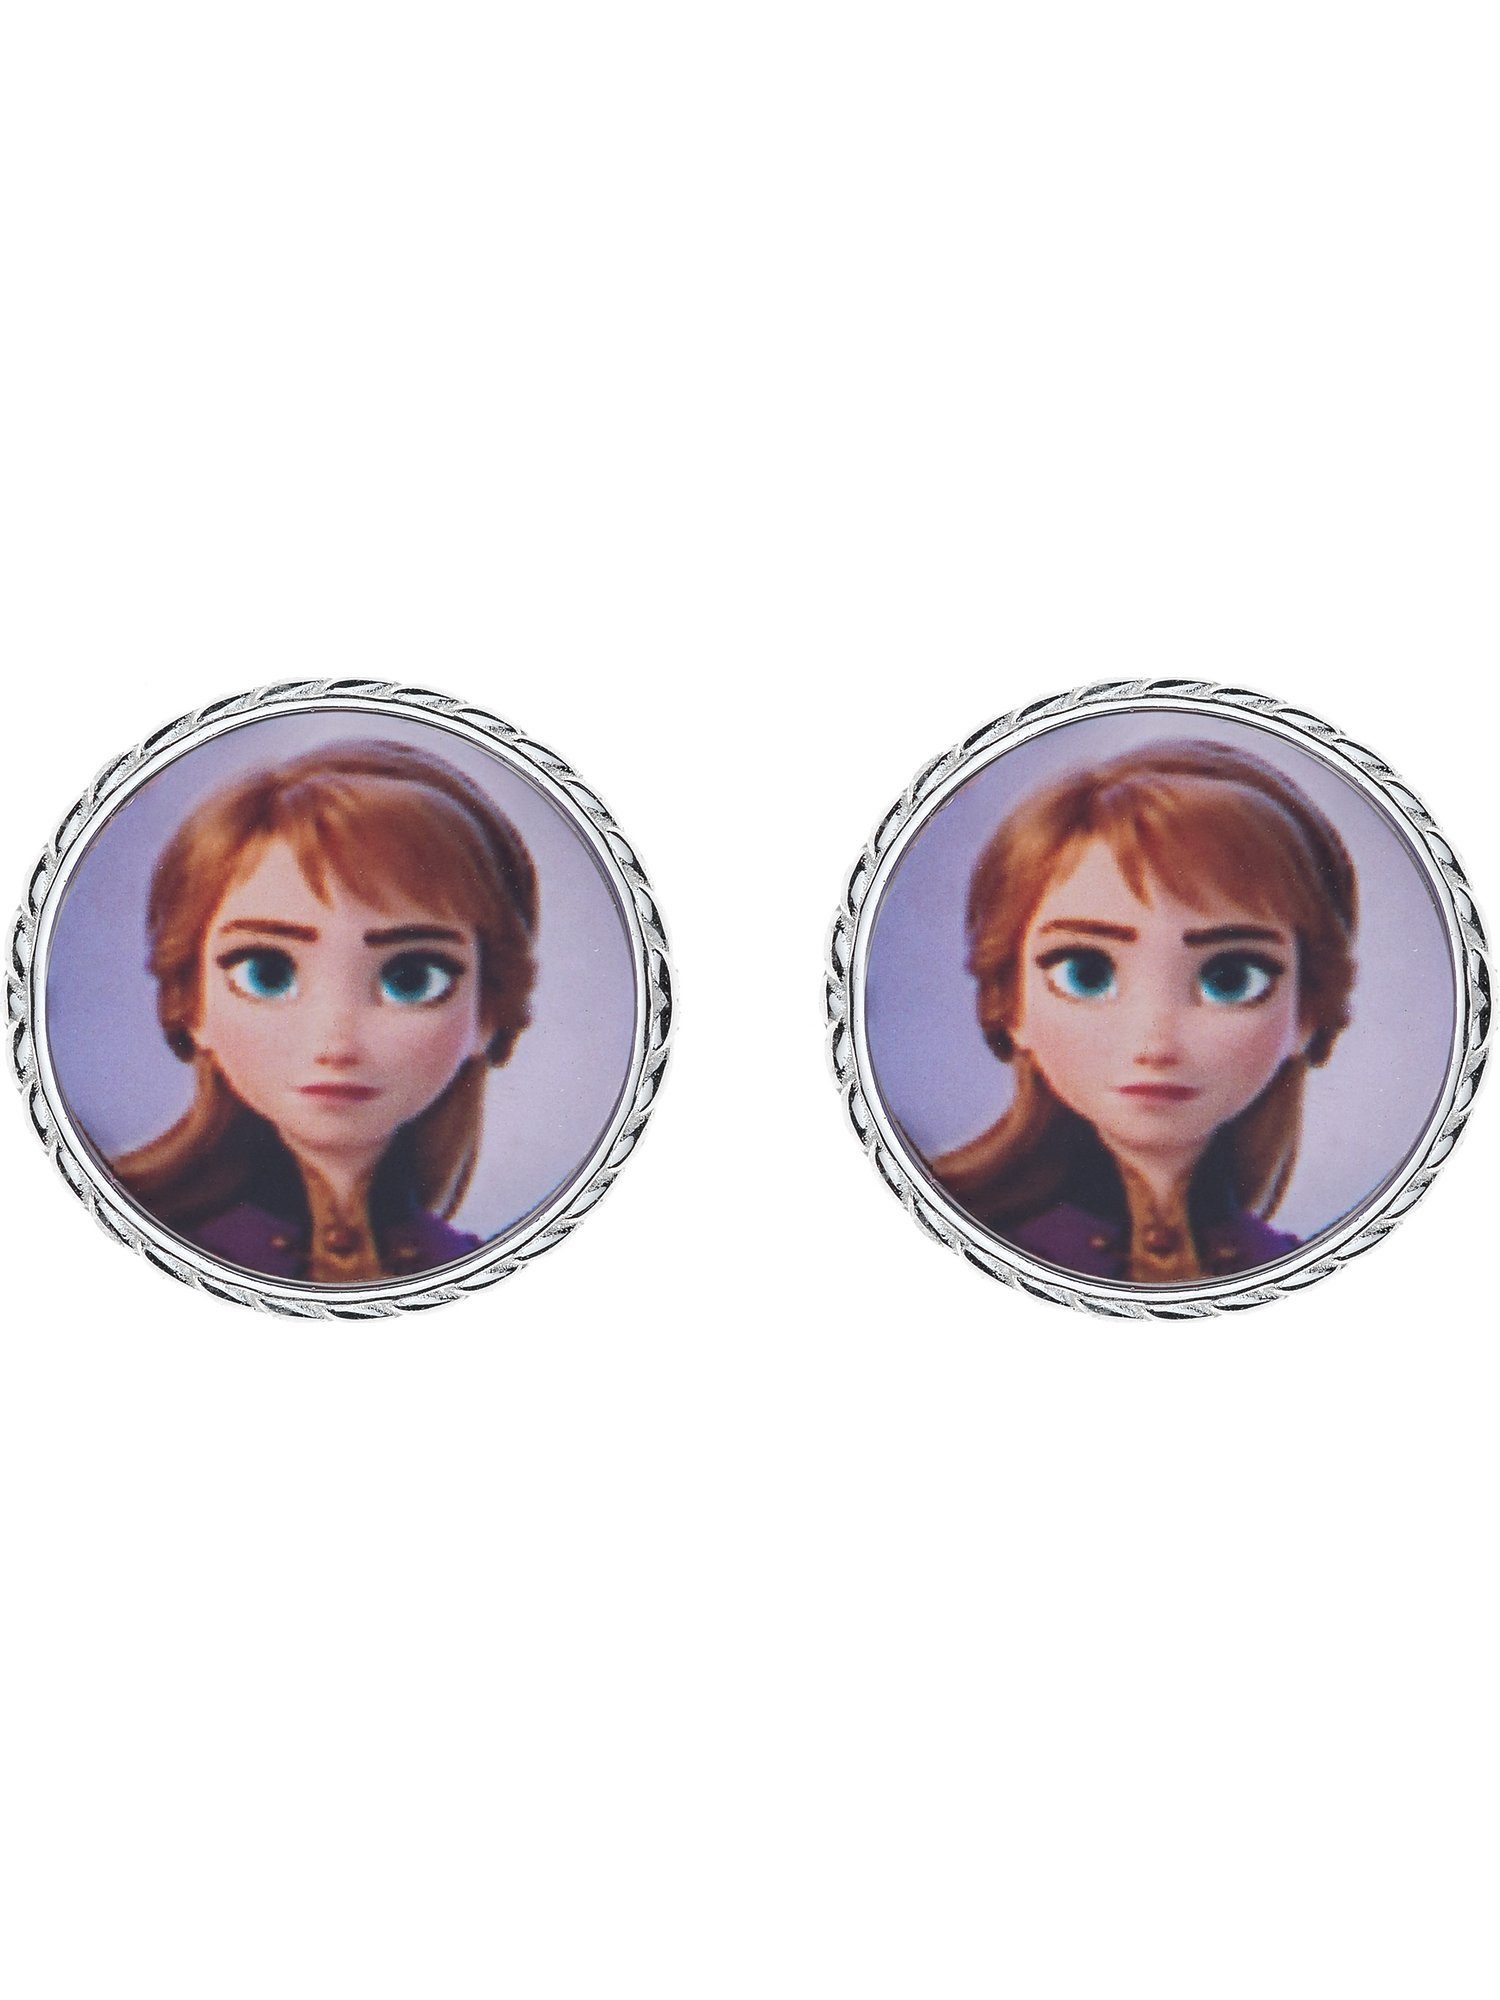 DISNEY Mädchen-Kinderohrring Paar Ohrhänger Disney Jewelry 925er Silber